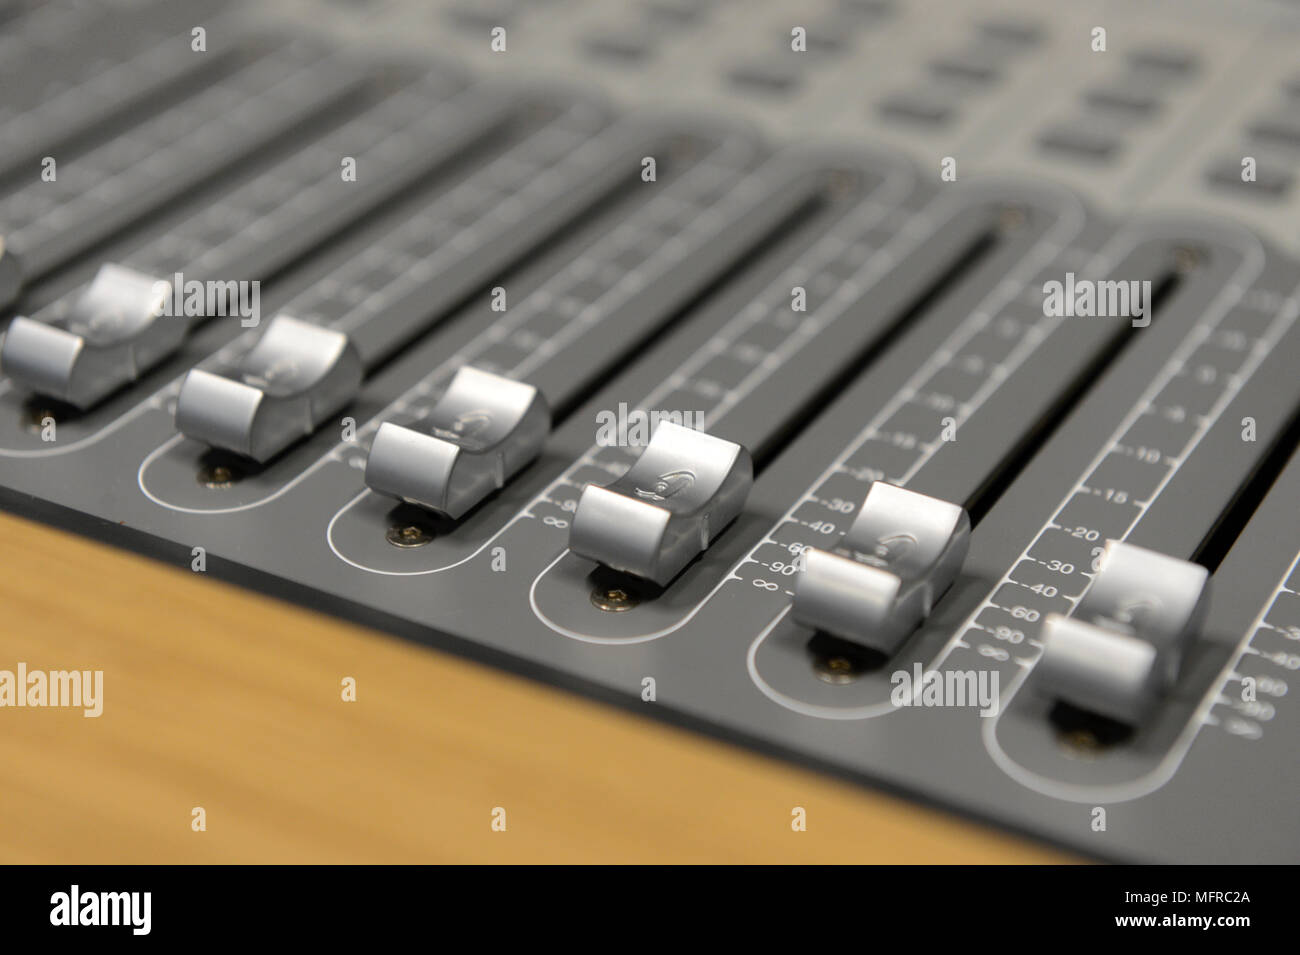 Close Ups of professional music mixing desks Stock Photo